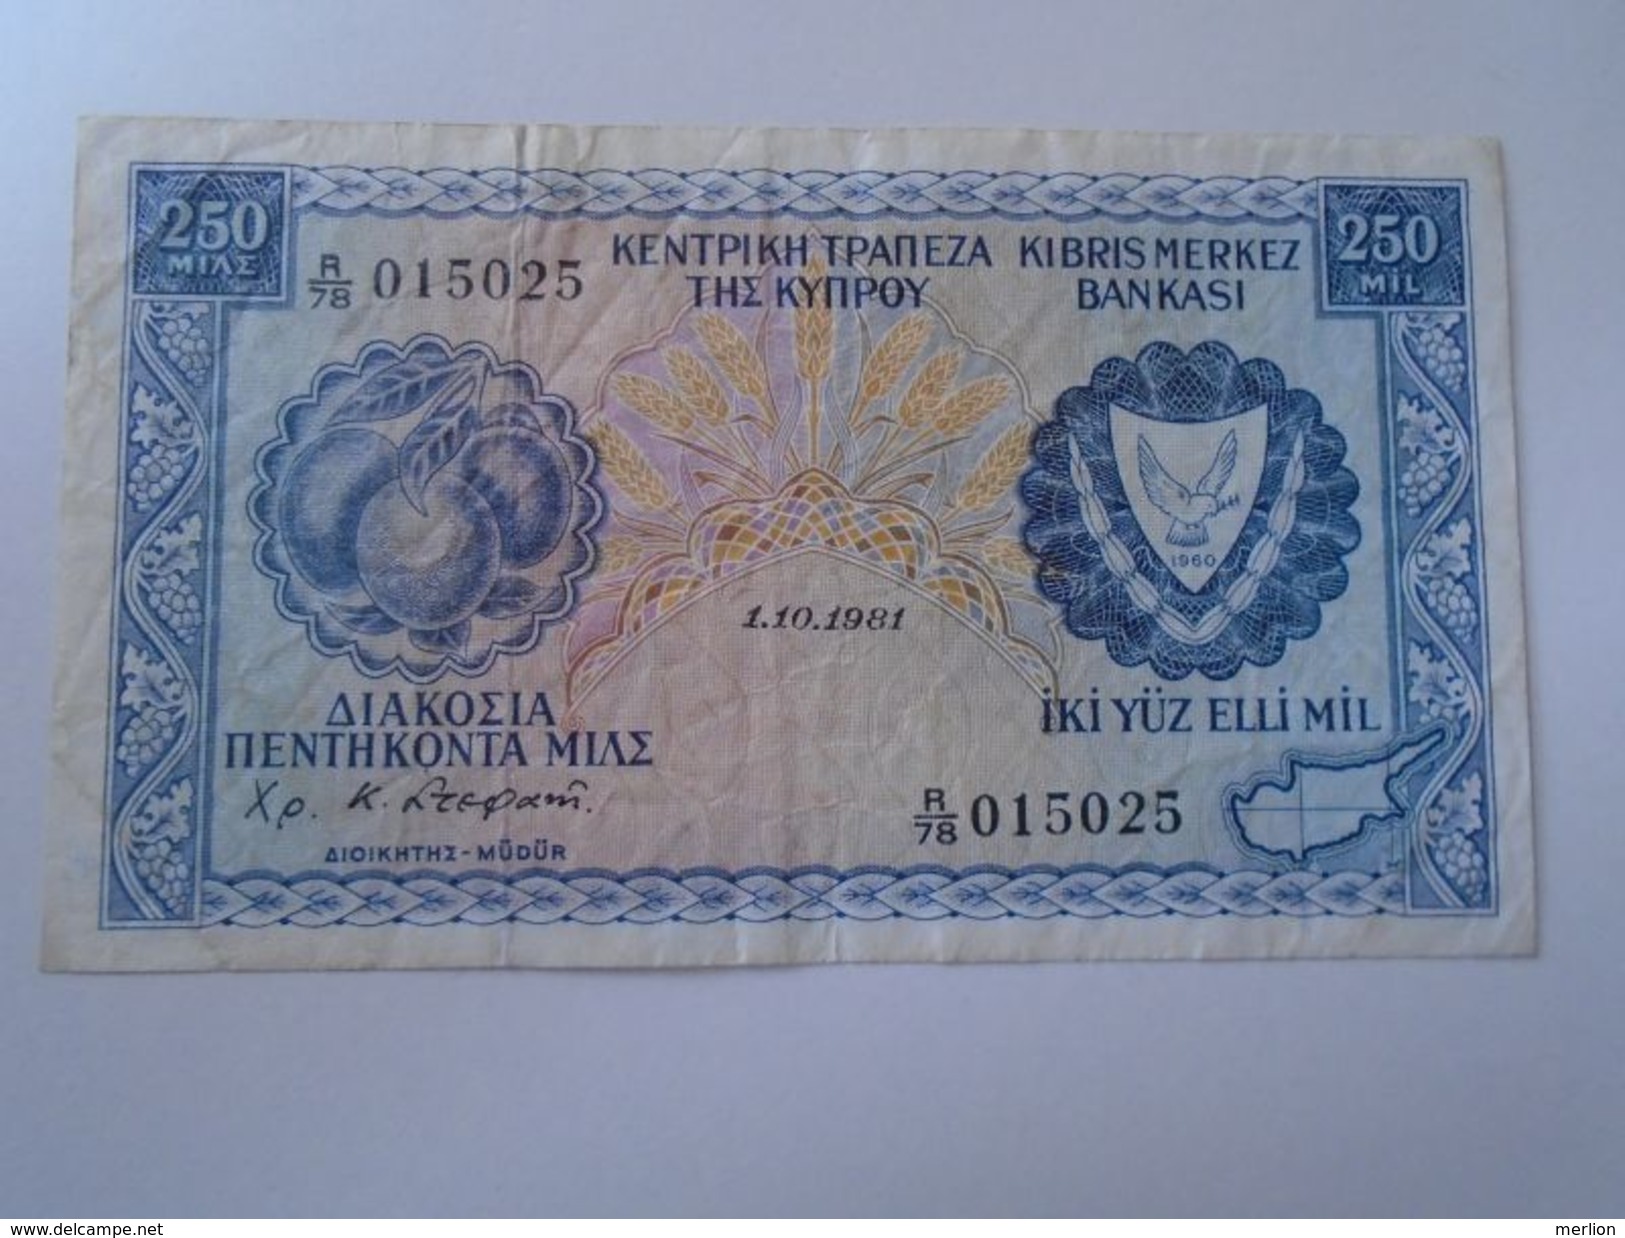 DEL001.13  Cyprus 250 Mils 1981 In (F) Condition Banknote P-41c - Cyprus